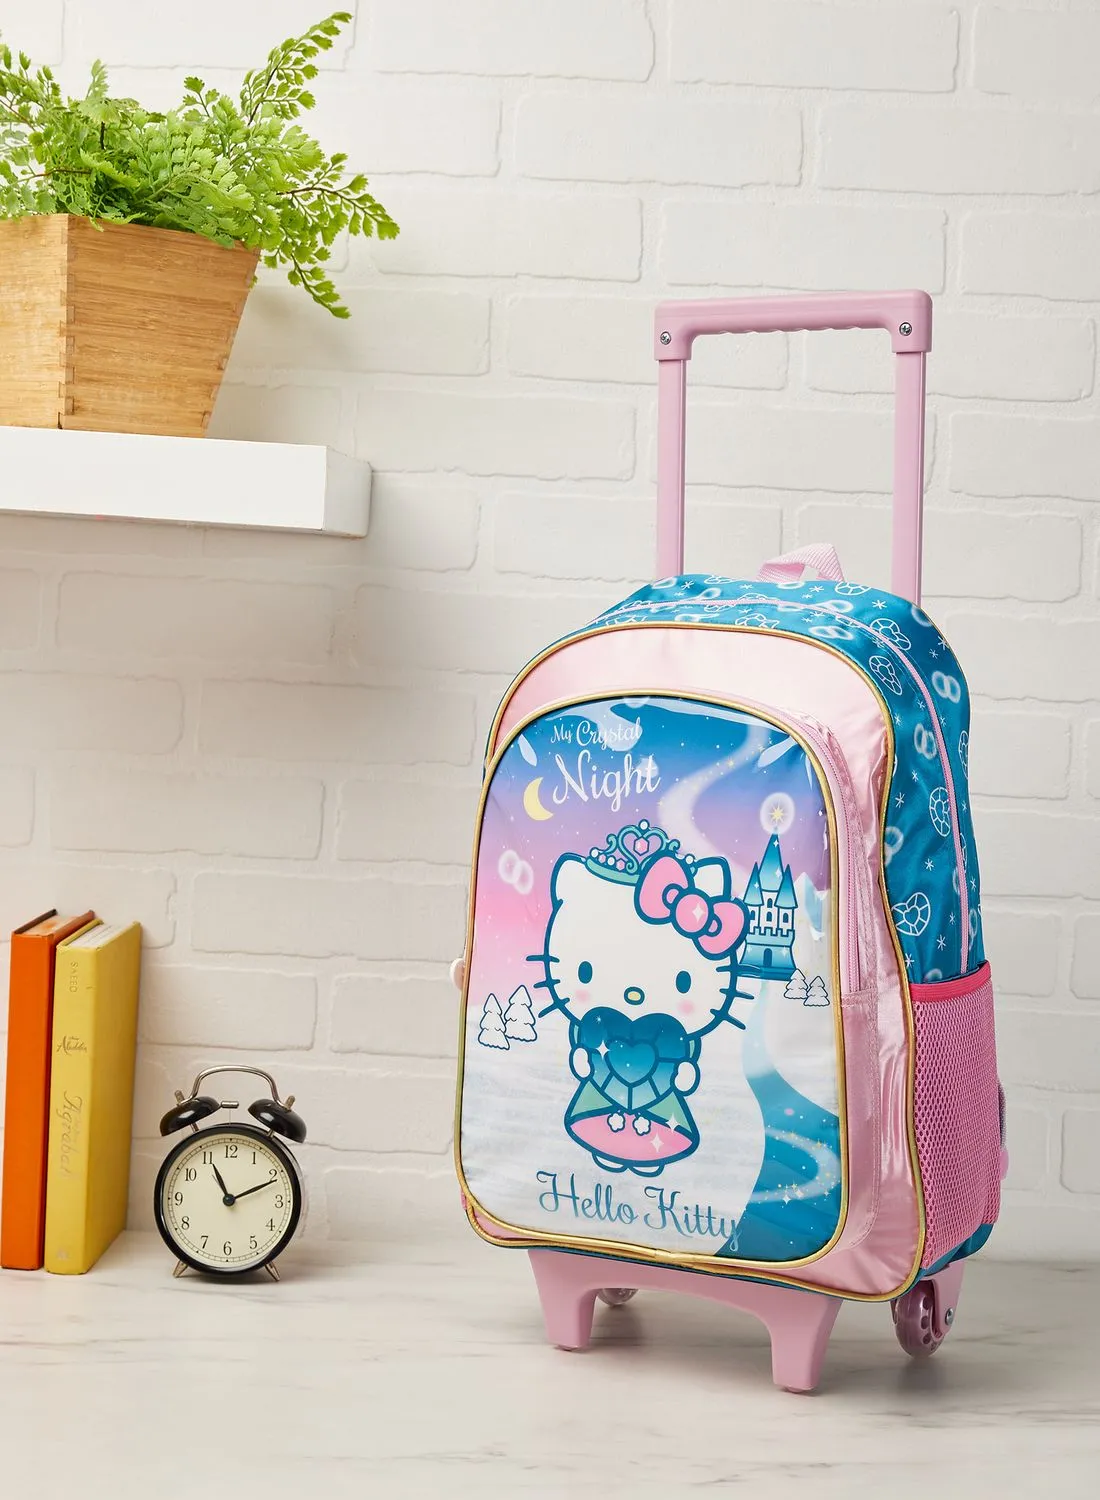 Hello Kitty Back To School Hello Kitty 6In1 Trolley Box Set